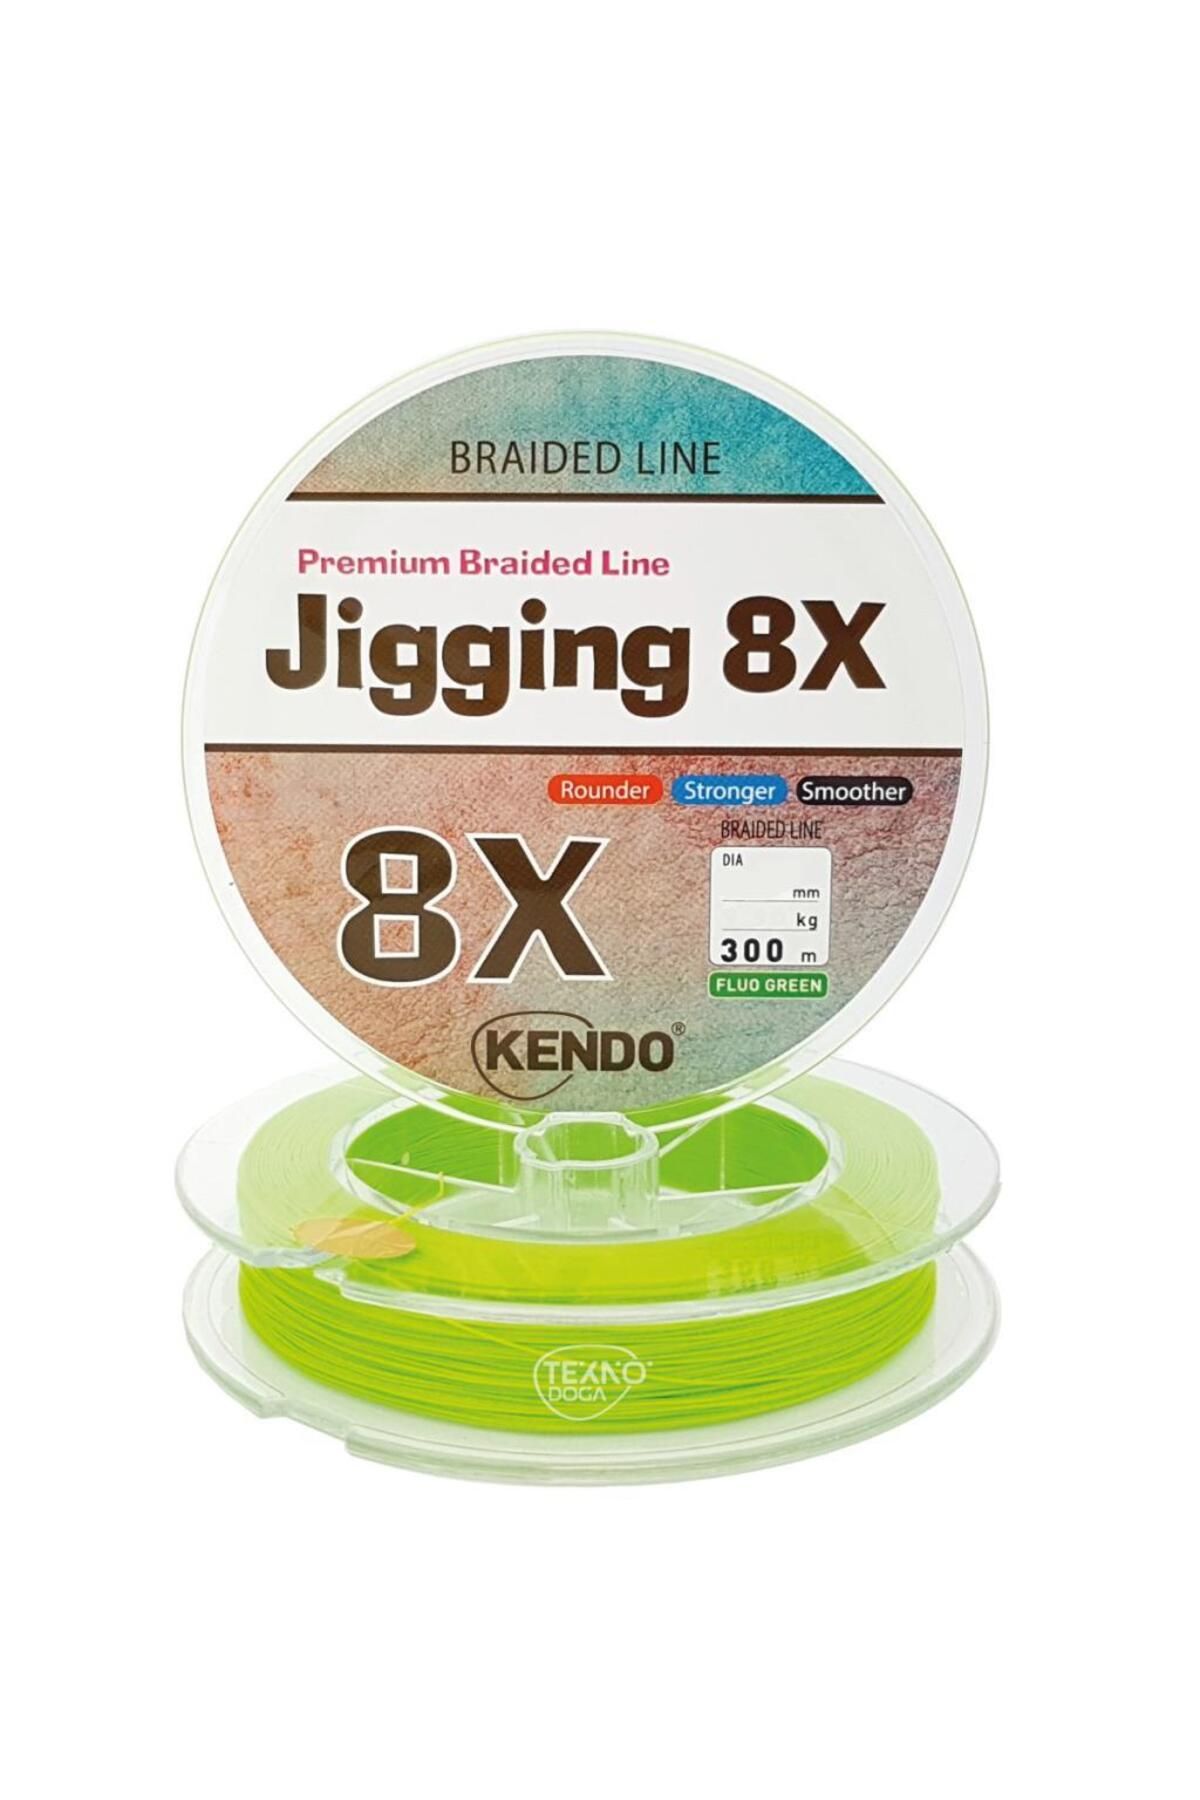 Kendo Jigging 8x Flash ( Fluo Green ) Örgü Ip Olta Misinası 300mt 0.34 Mm